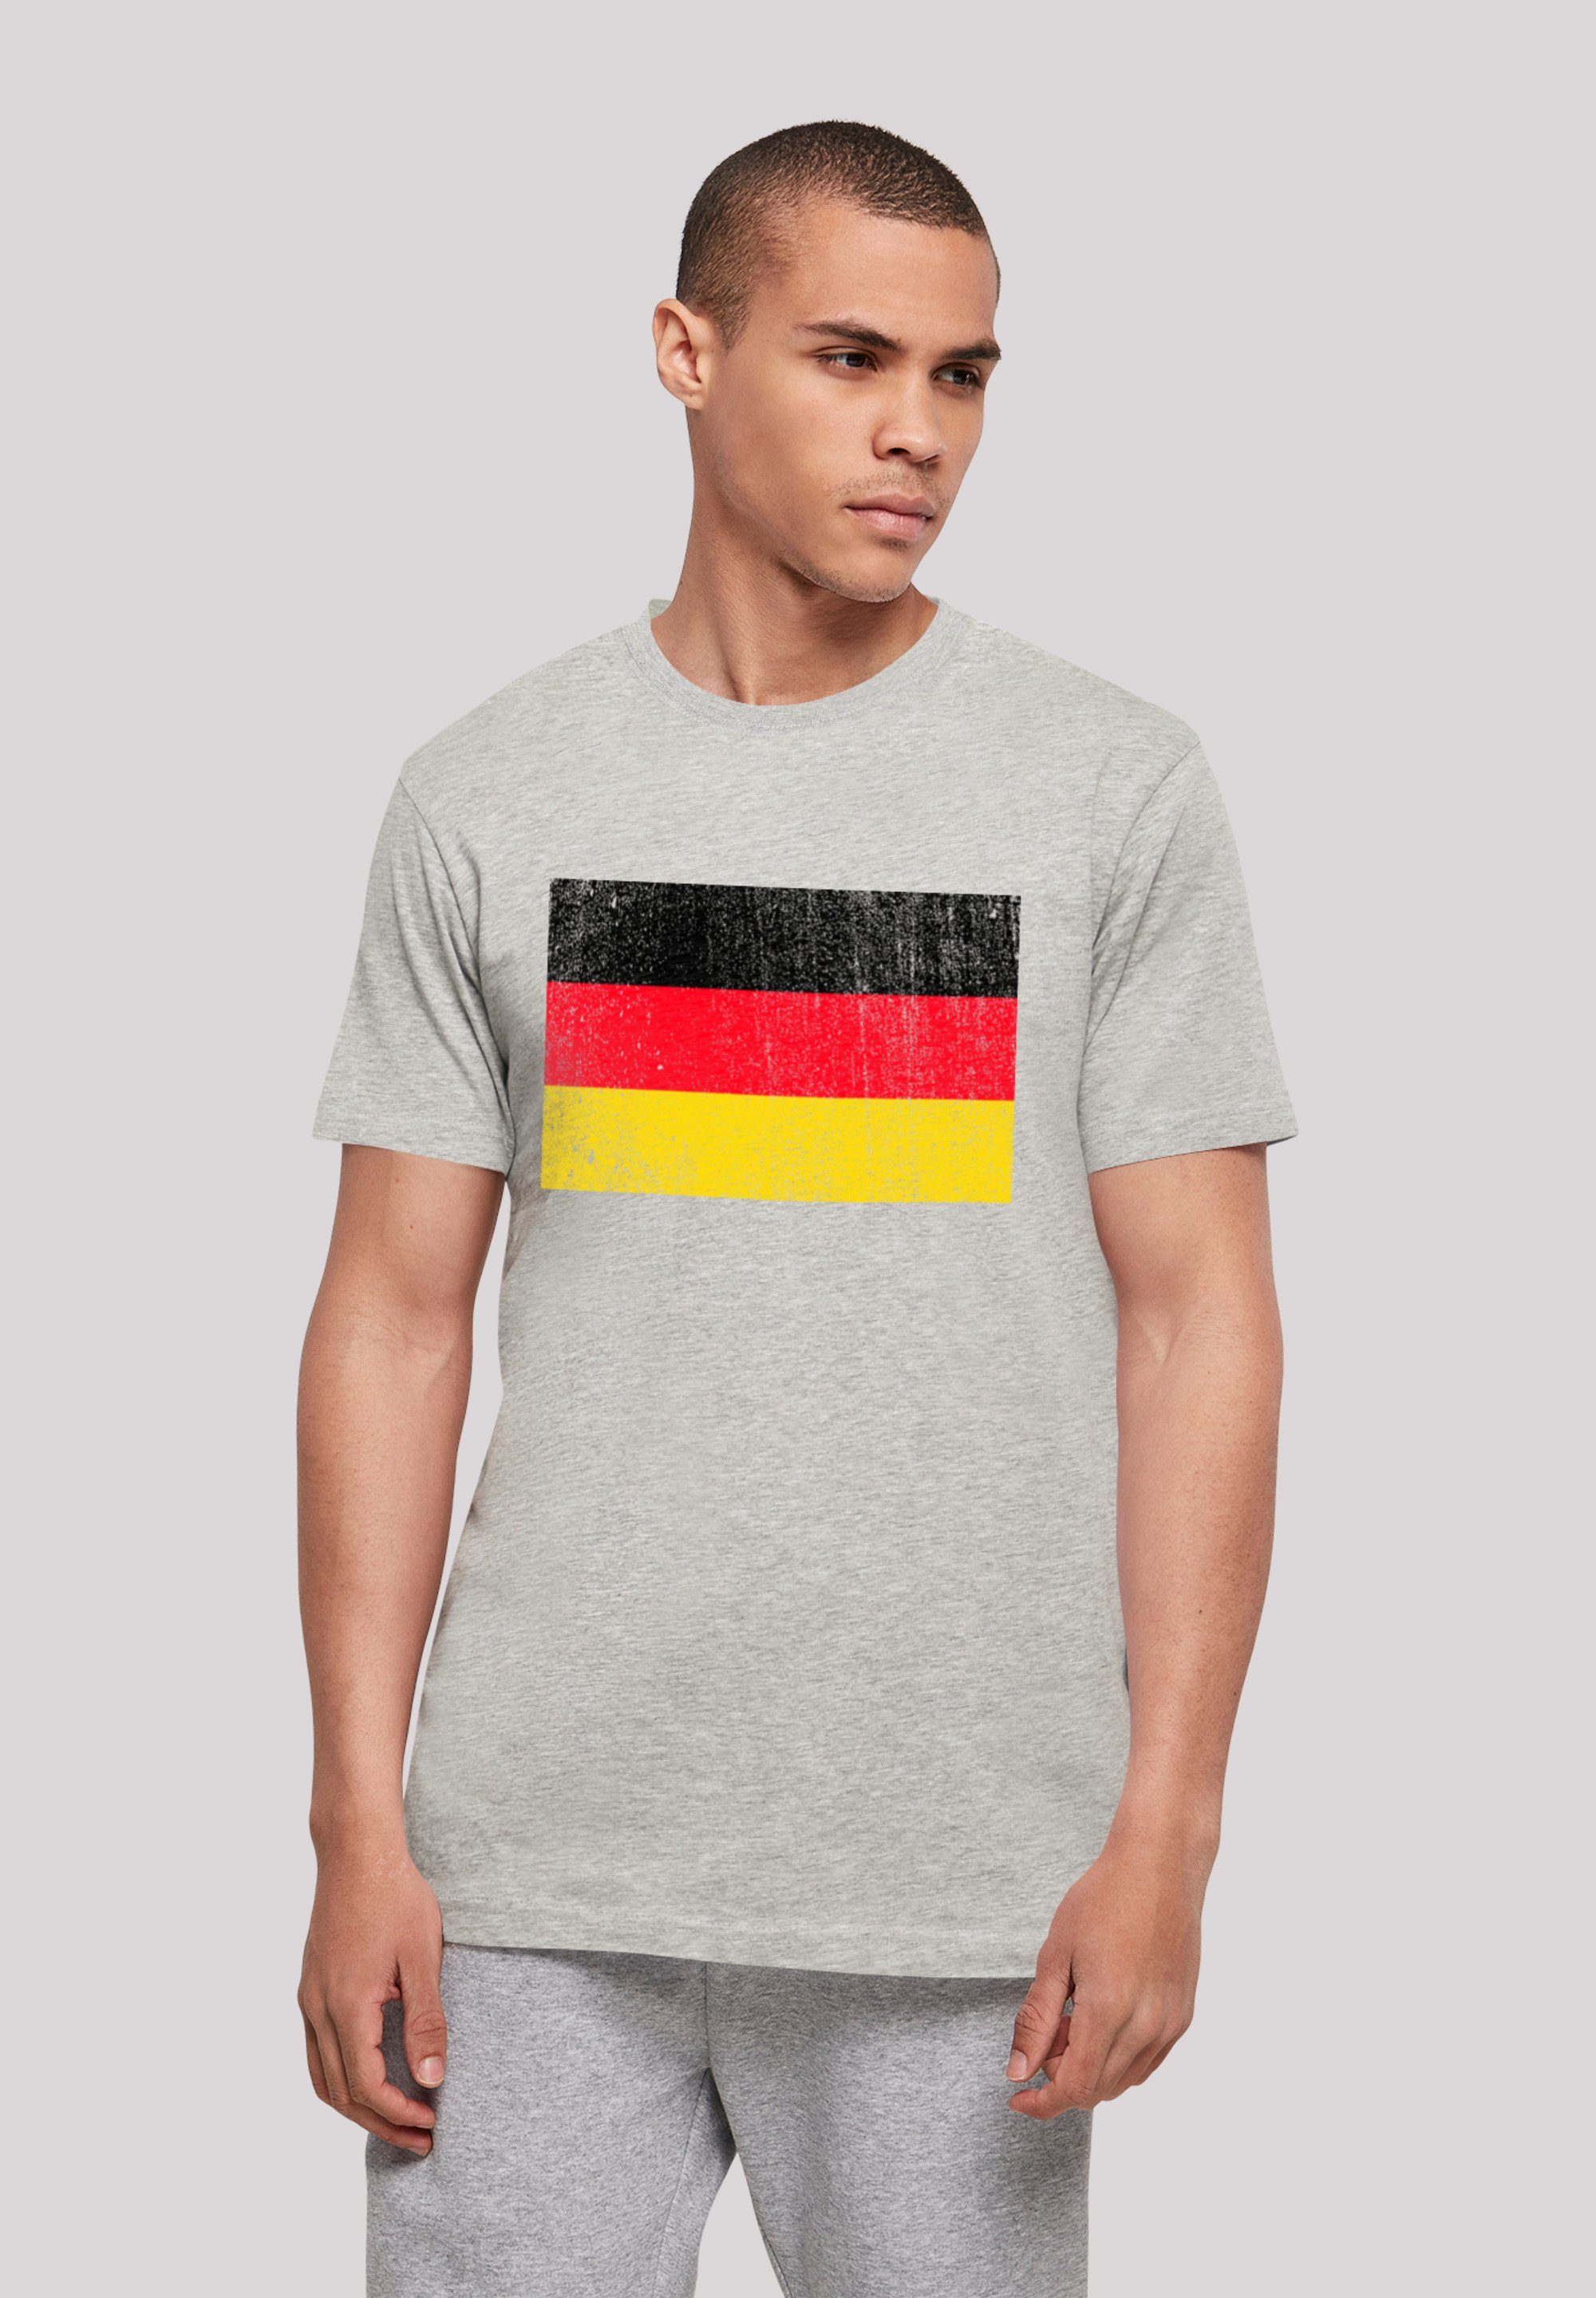 F4NT4STIC T-Shirt Deutschland Flagge Germany distressed Print heather grey